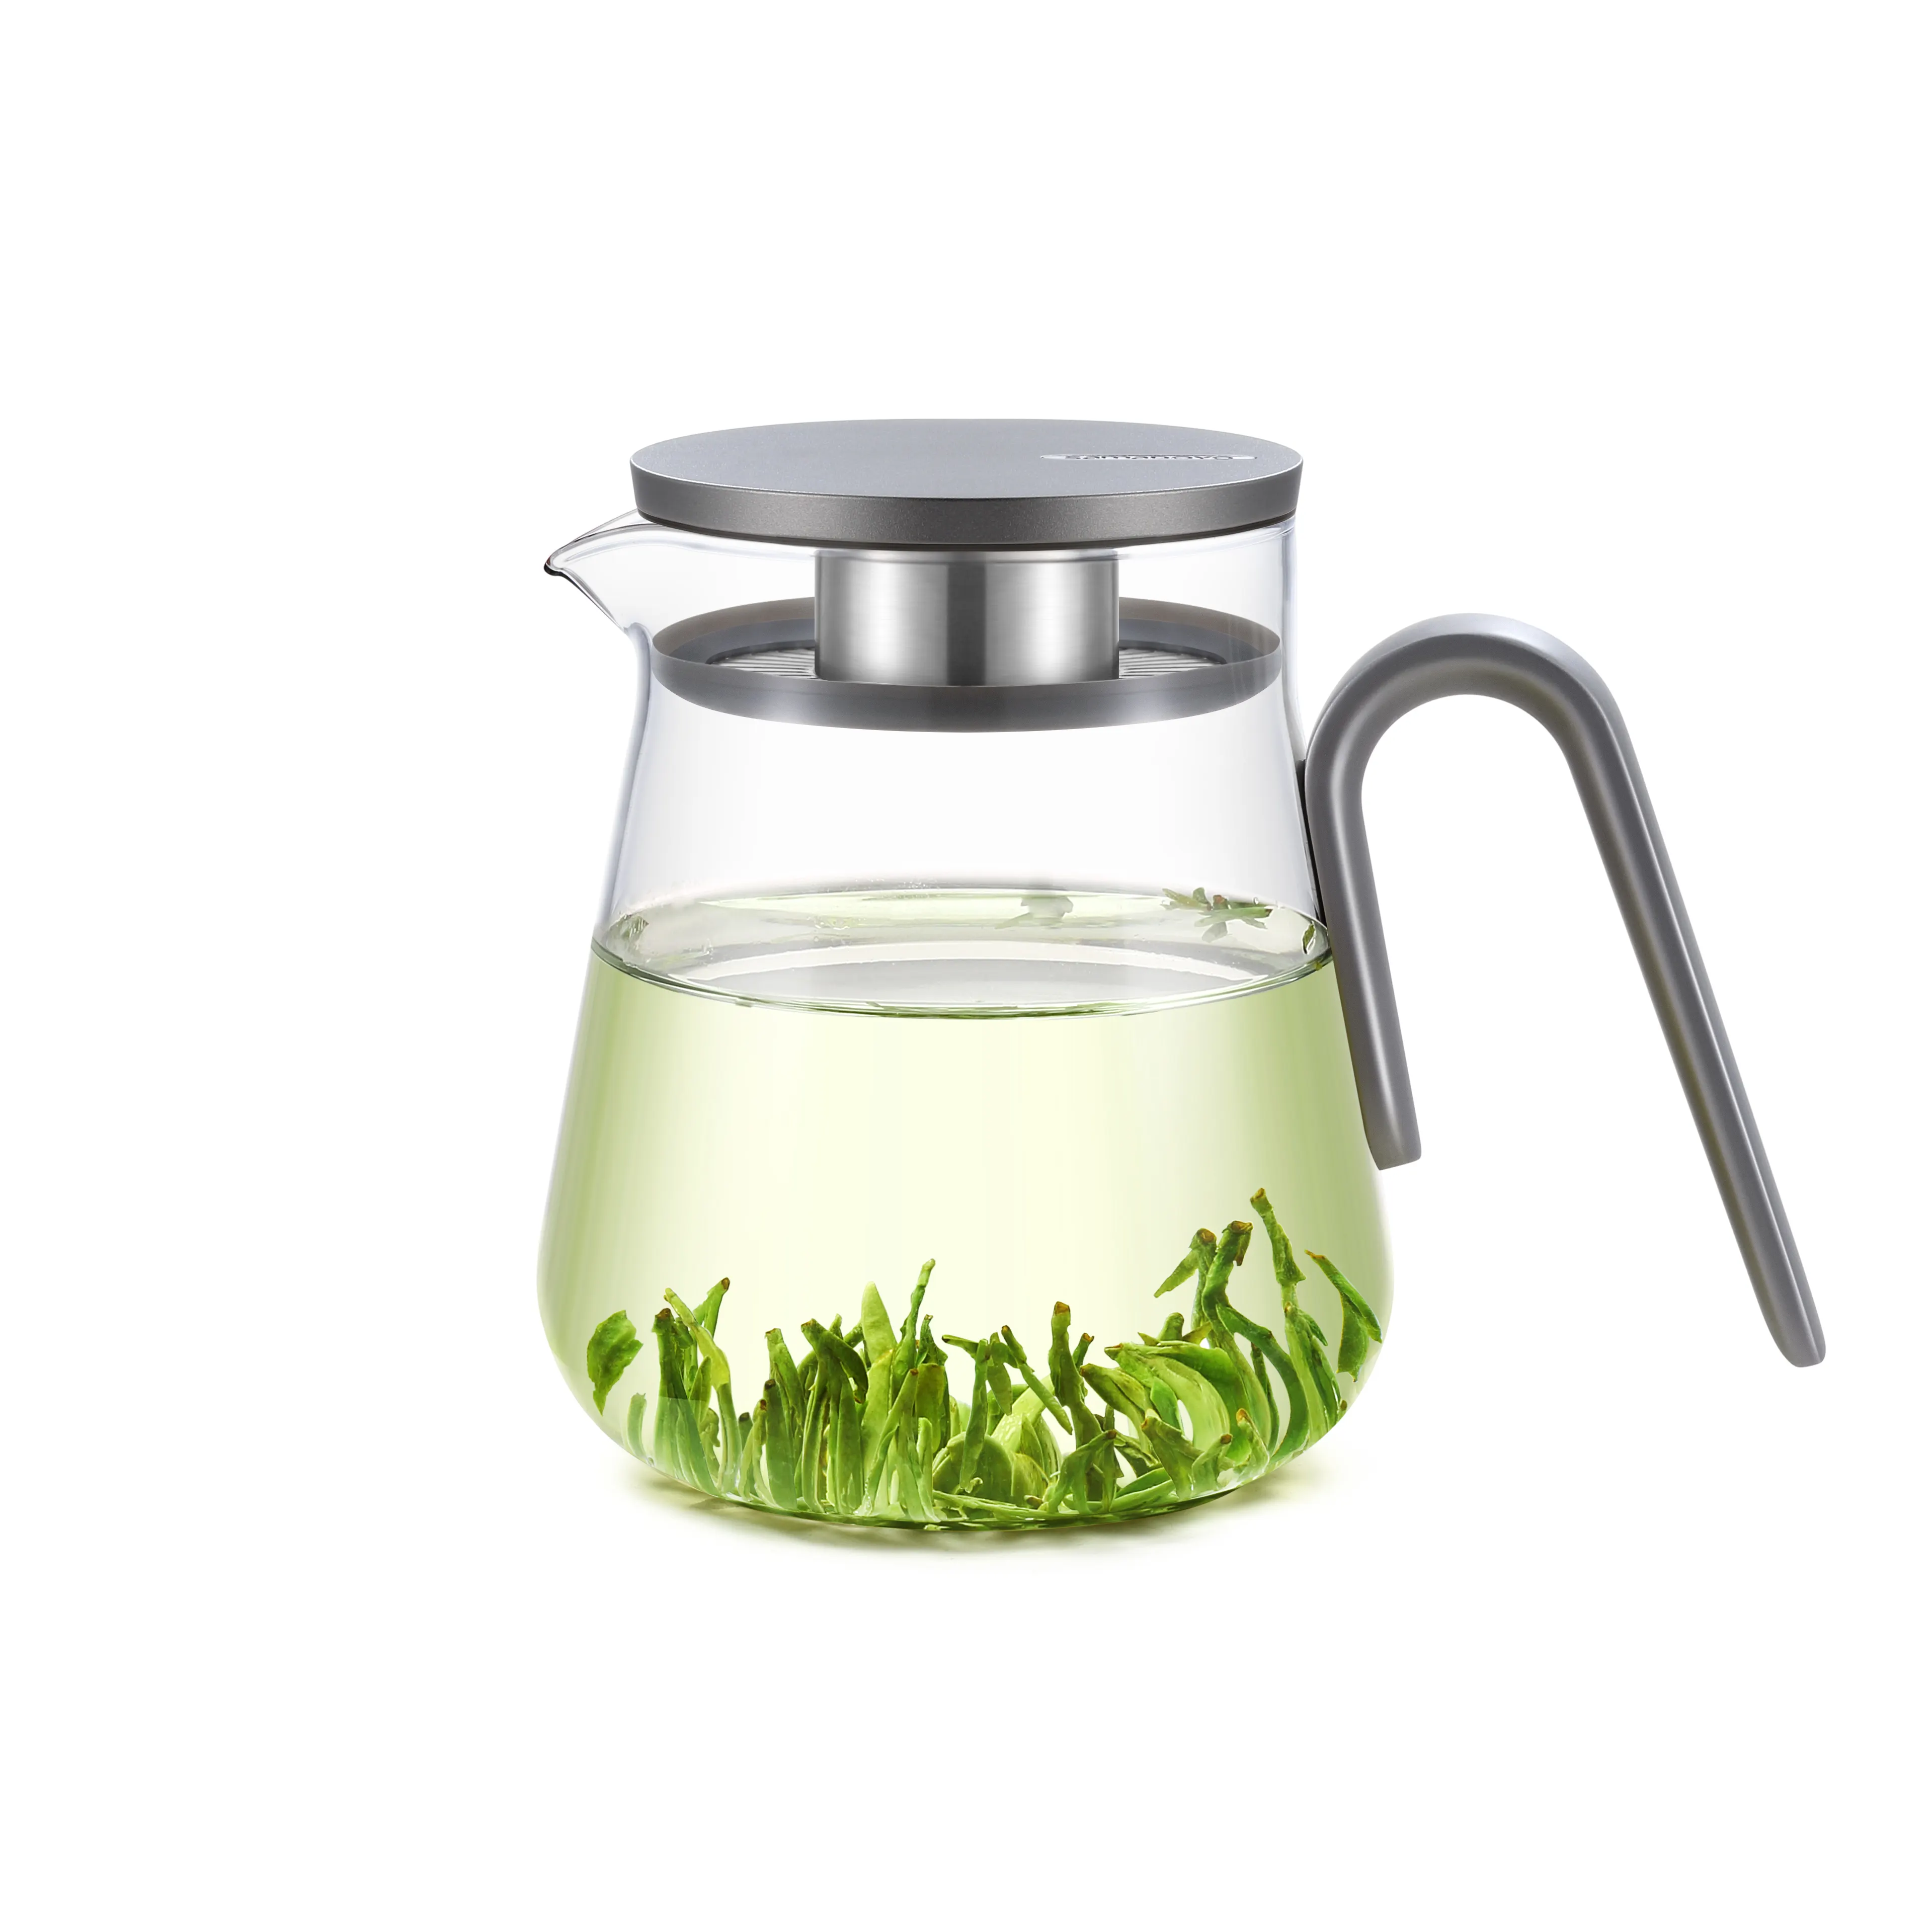 Samadoyo S/S teko teh kaca, teko teh terintegrasi pembuat teh kaca dengan tutup aluminium